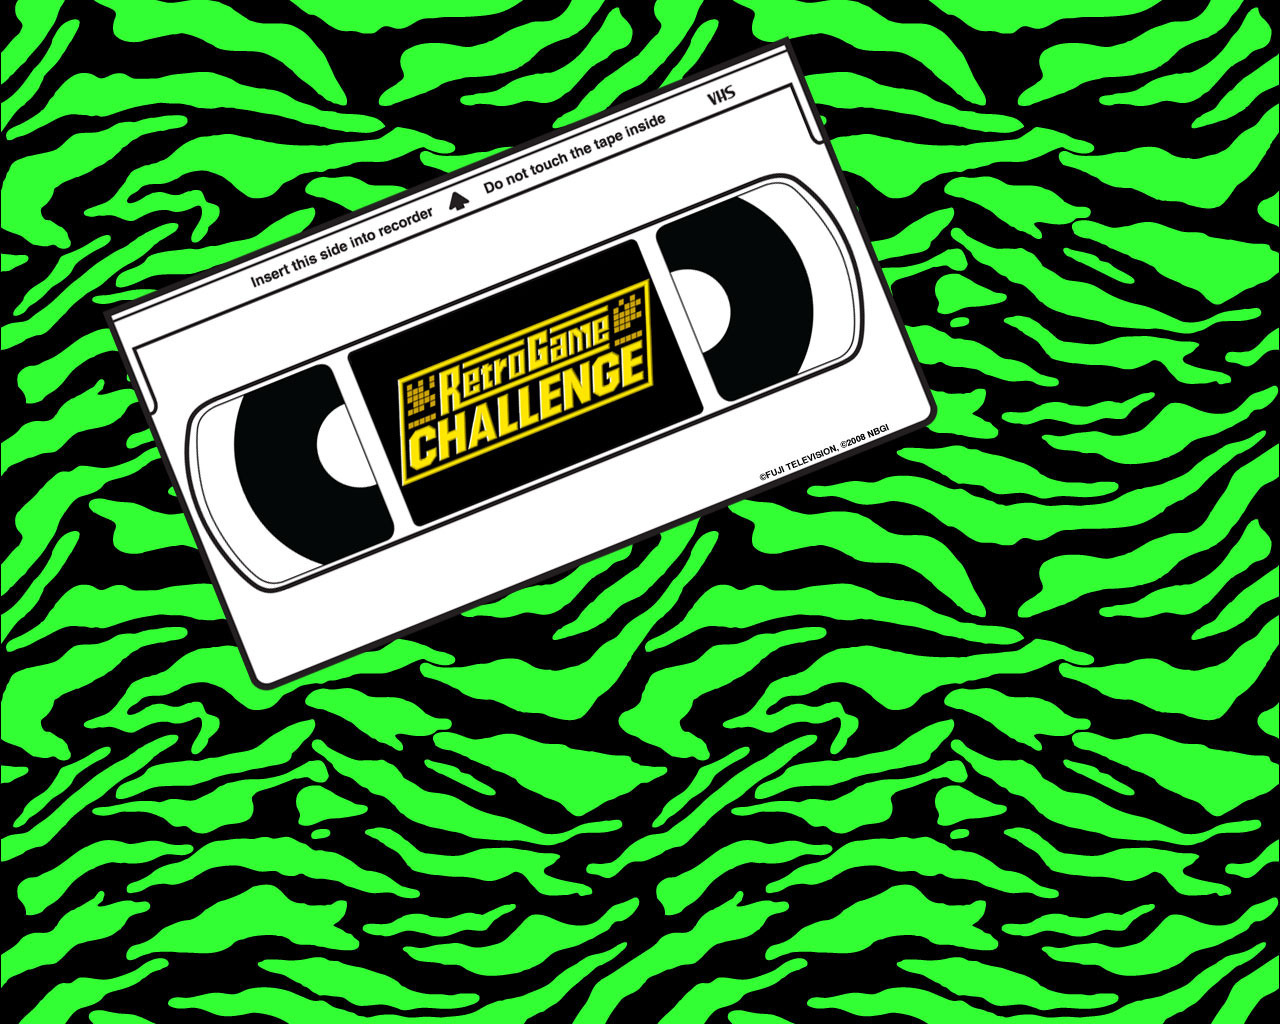 Vhs Cassette Standard Wallpaper - Retro Game Challenge - HD Wallpaper 